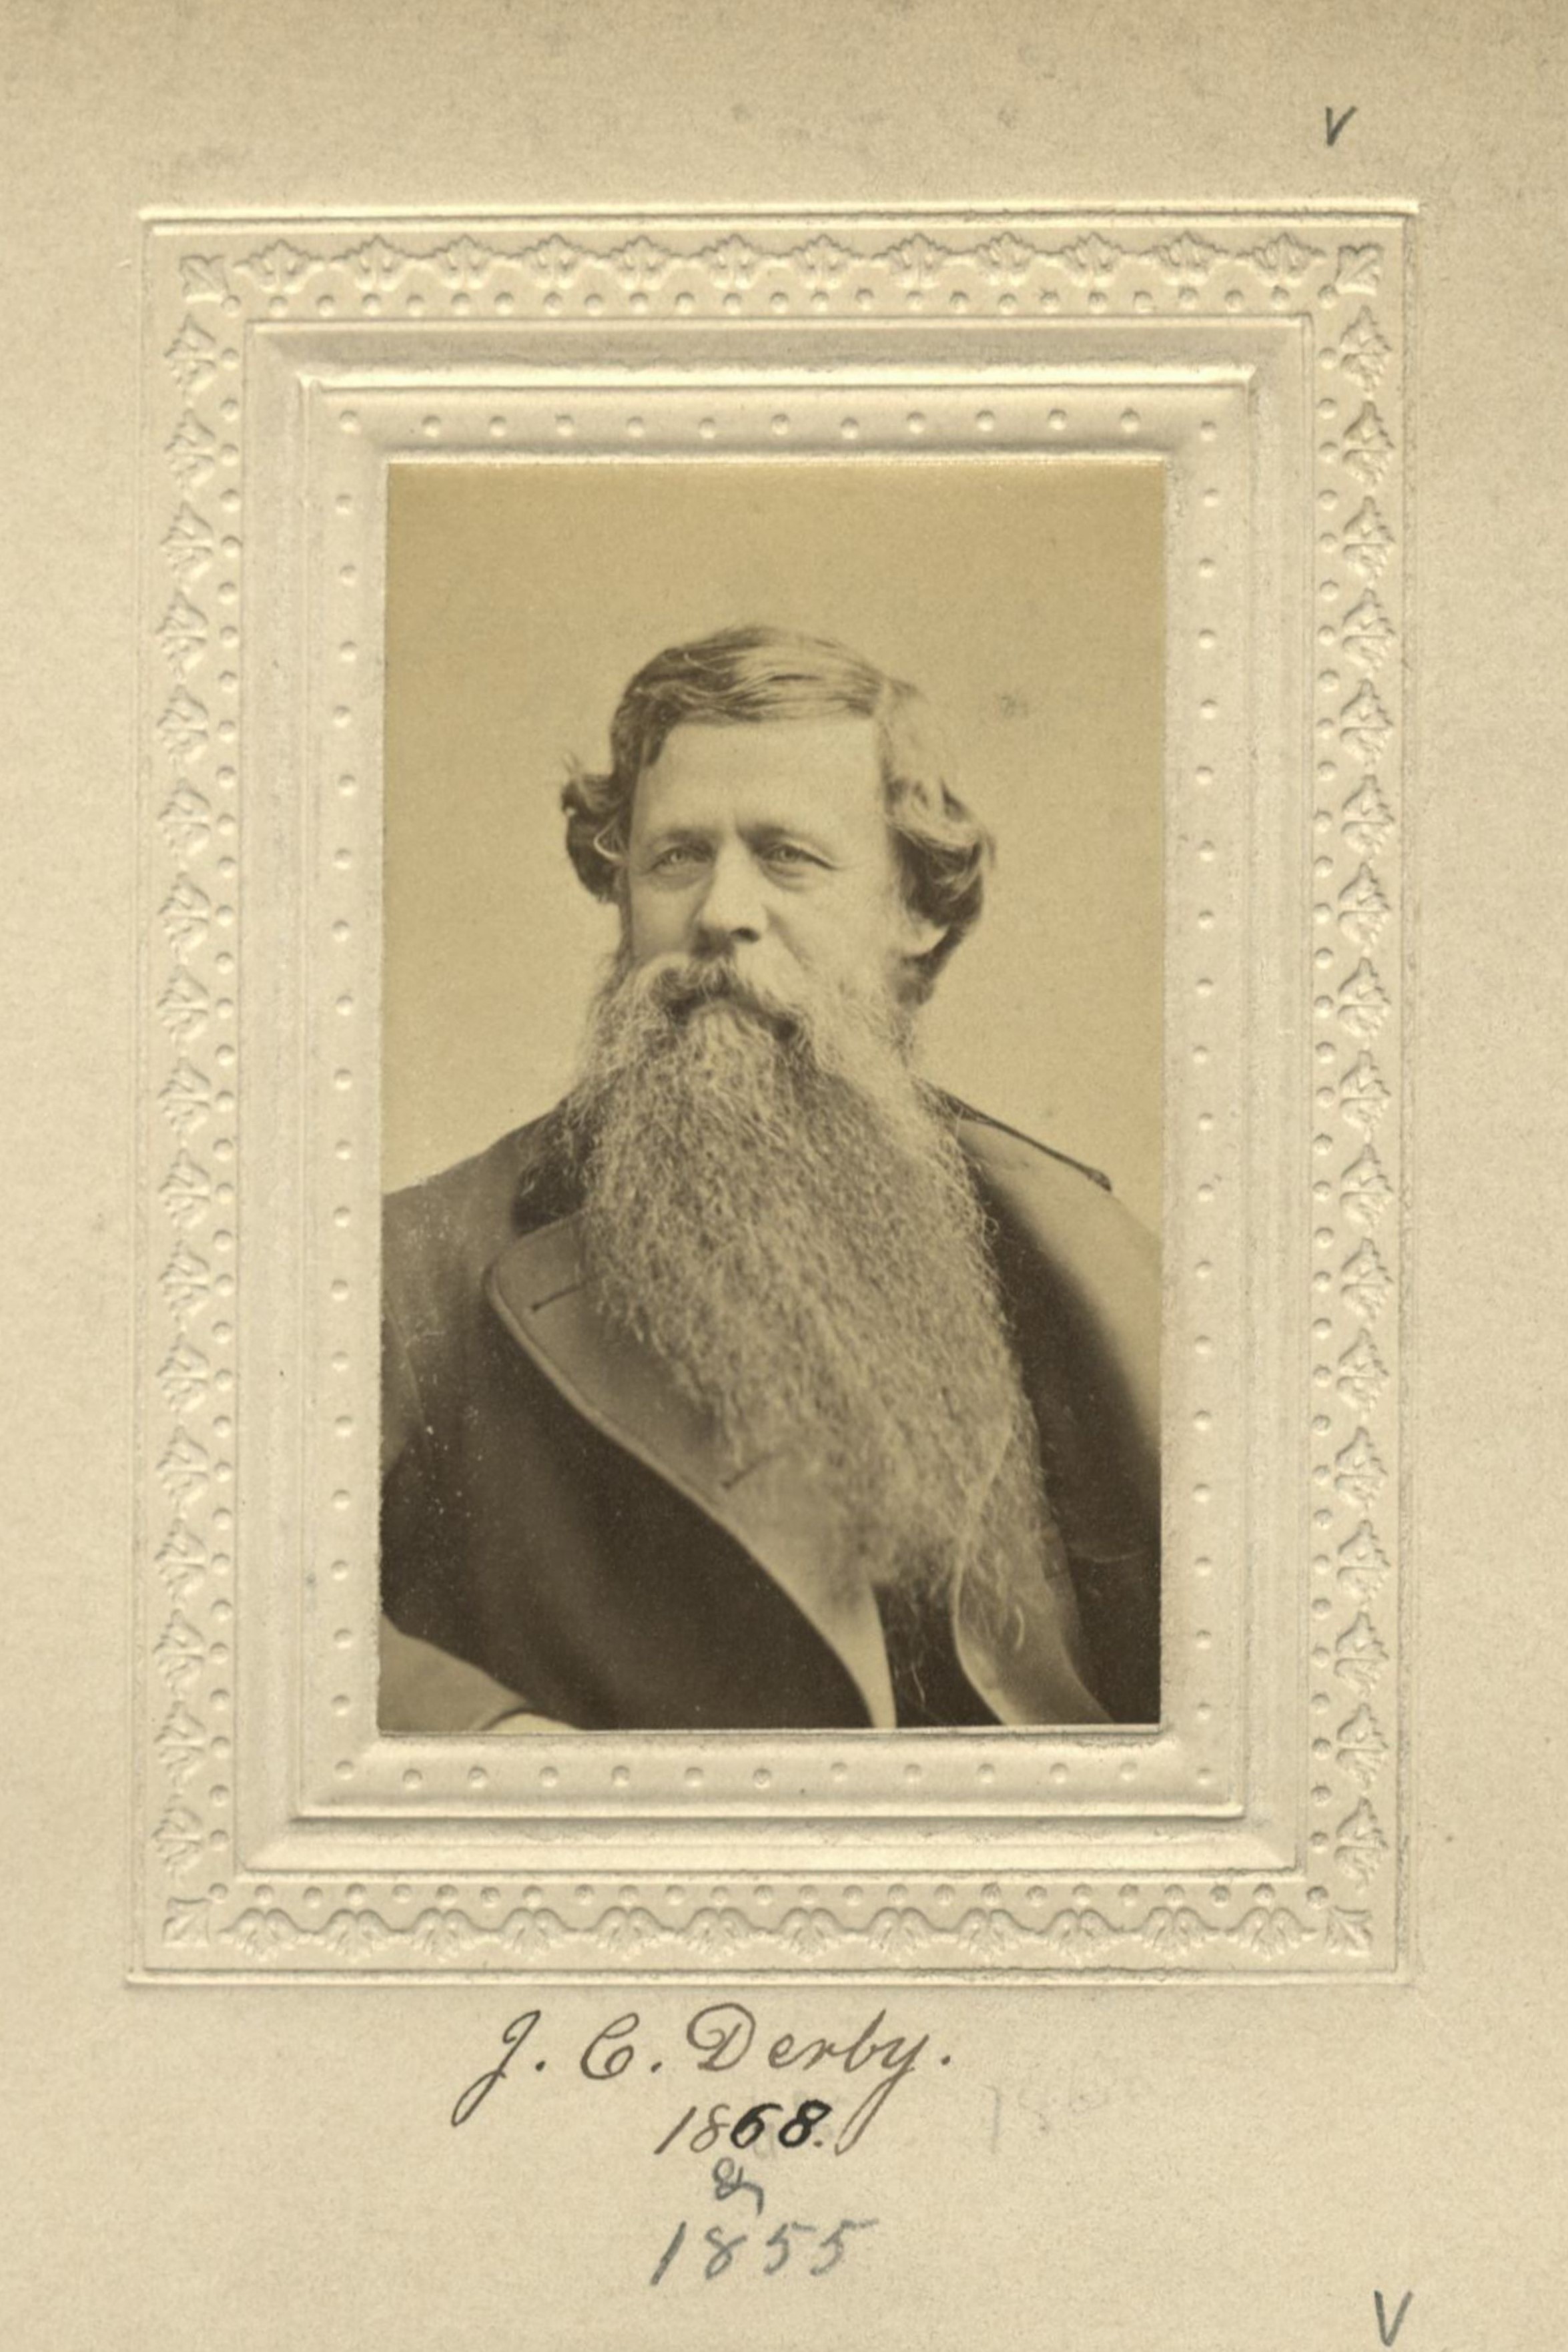 Member portrait of James C. Derby